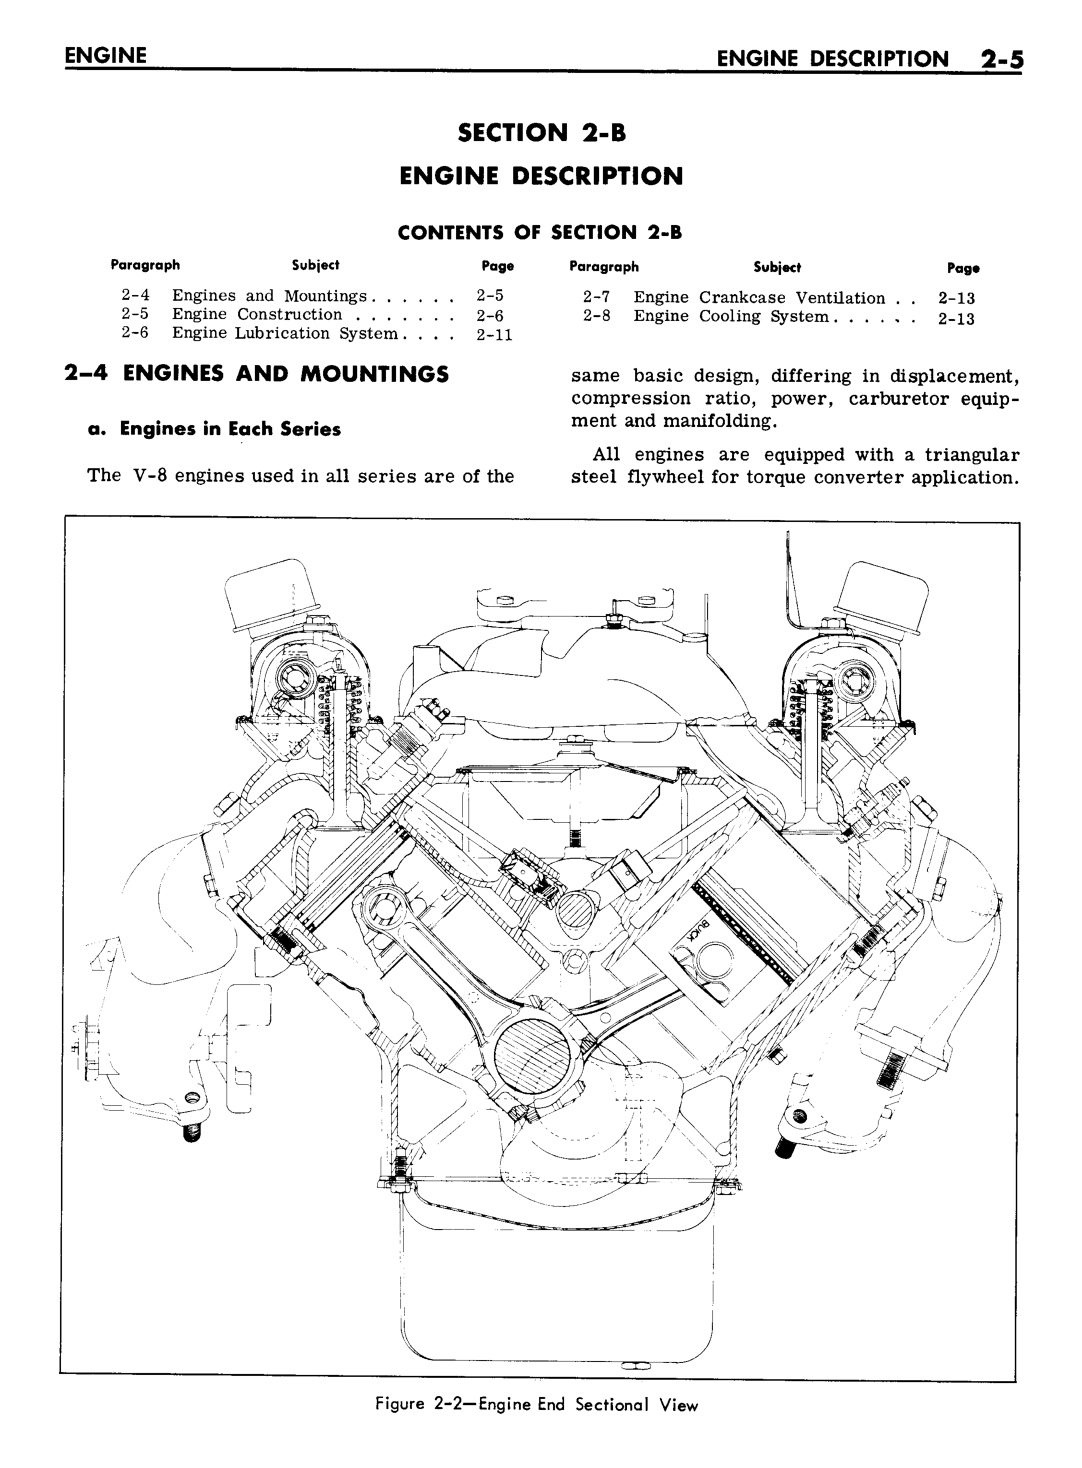 n_03 1961 Buick Shop Manual - Engine-005-005.jpg